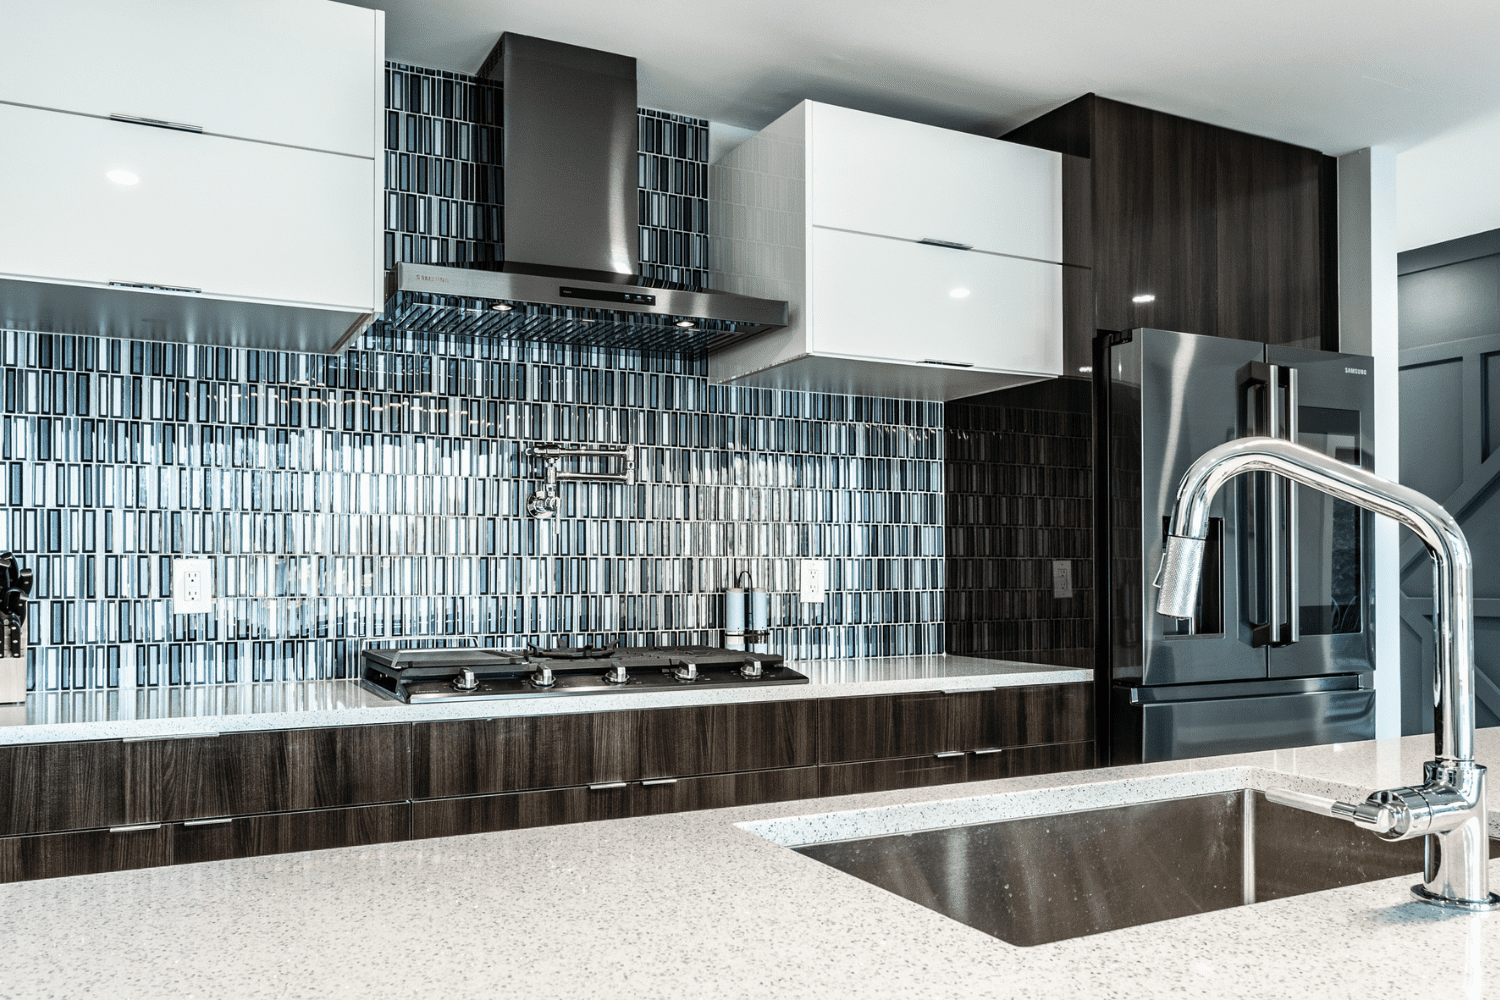 Nicholas Design Build | A stainless steel sink in a modern kitchen.